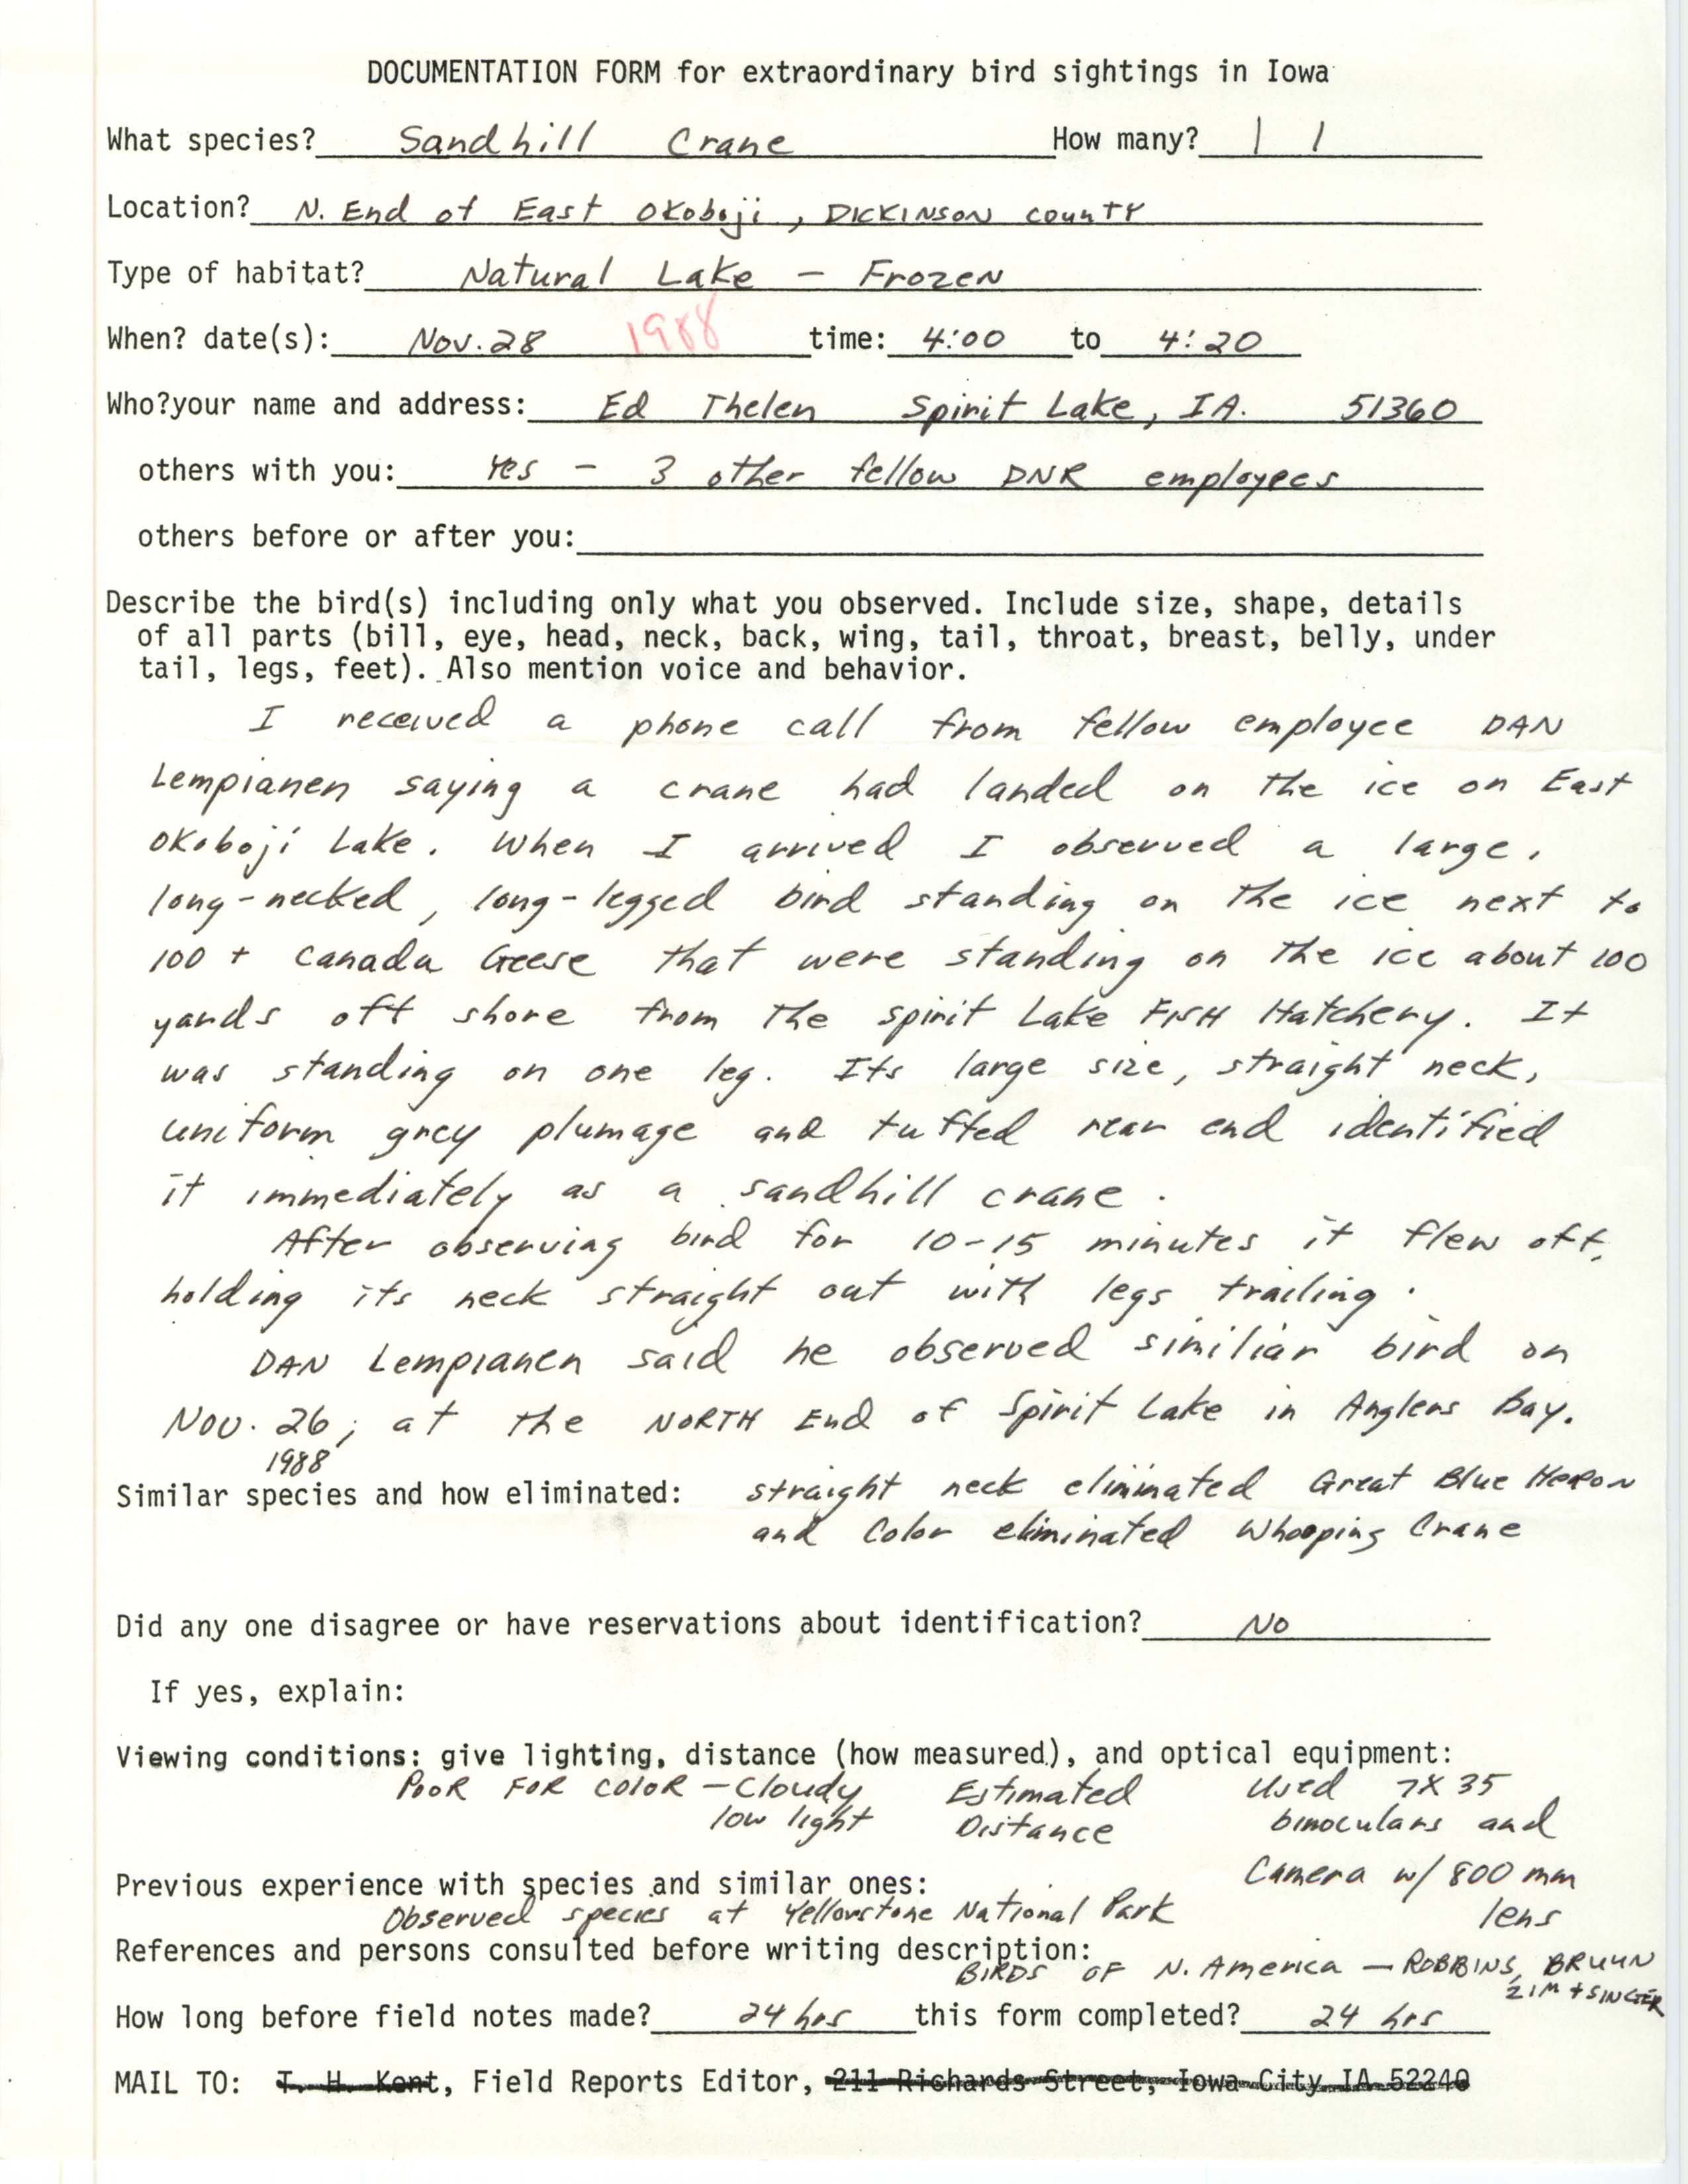 Rare bird documentation form for Sandhill Crane at East Okoboji, 1988